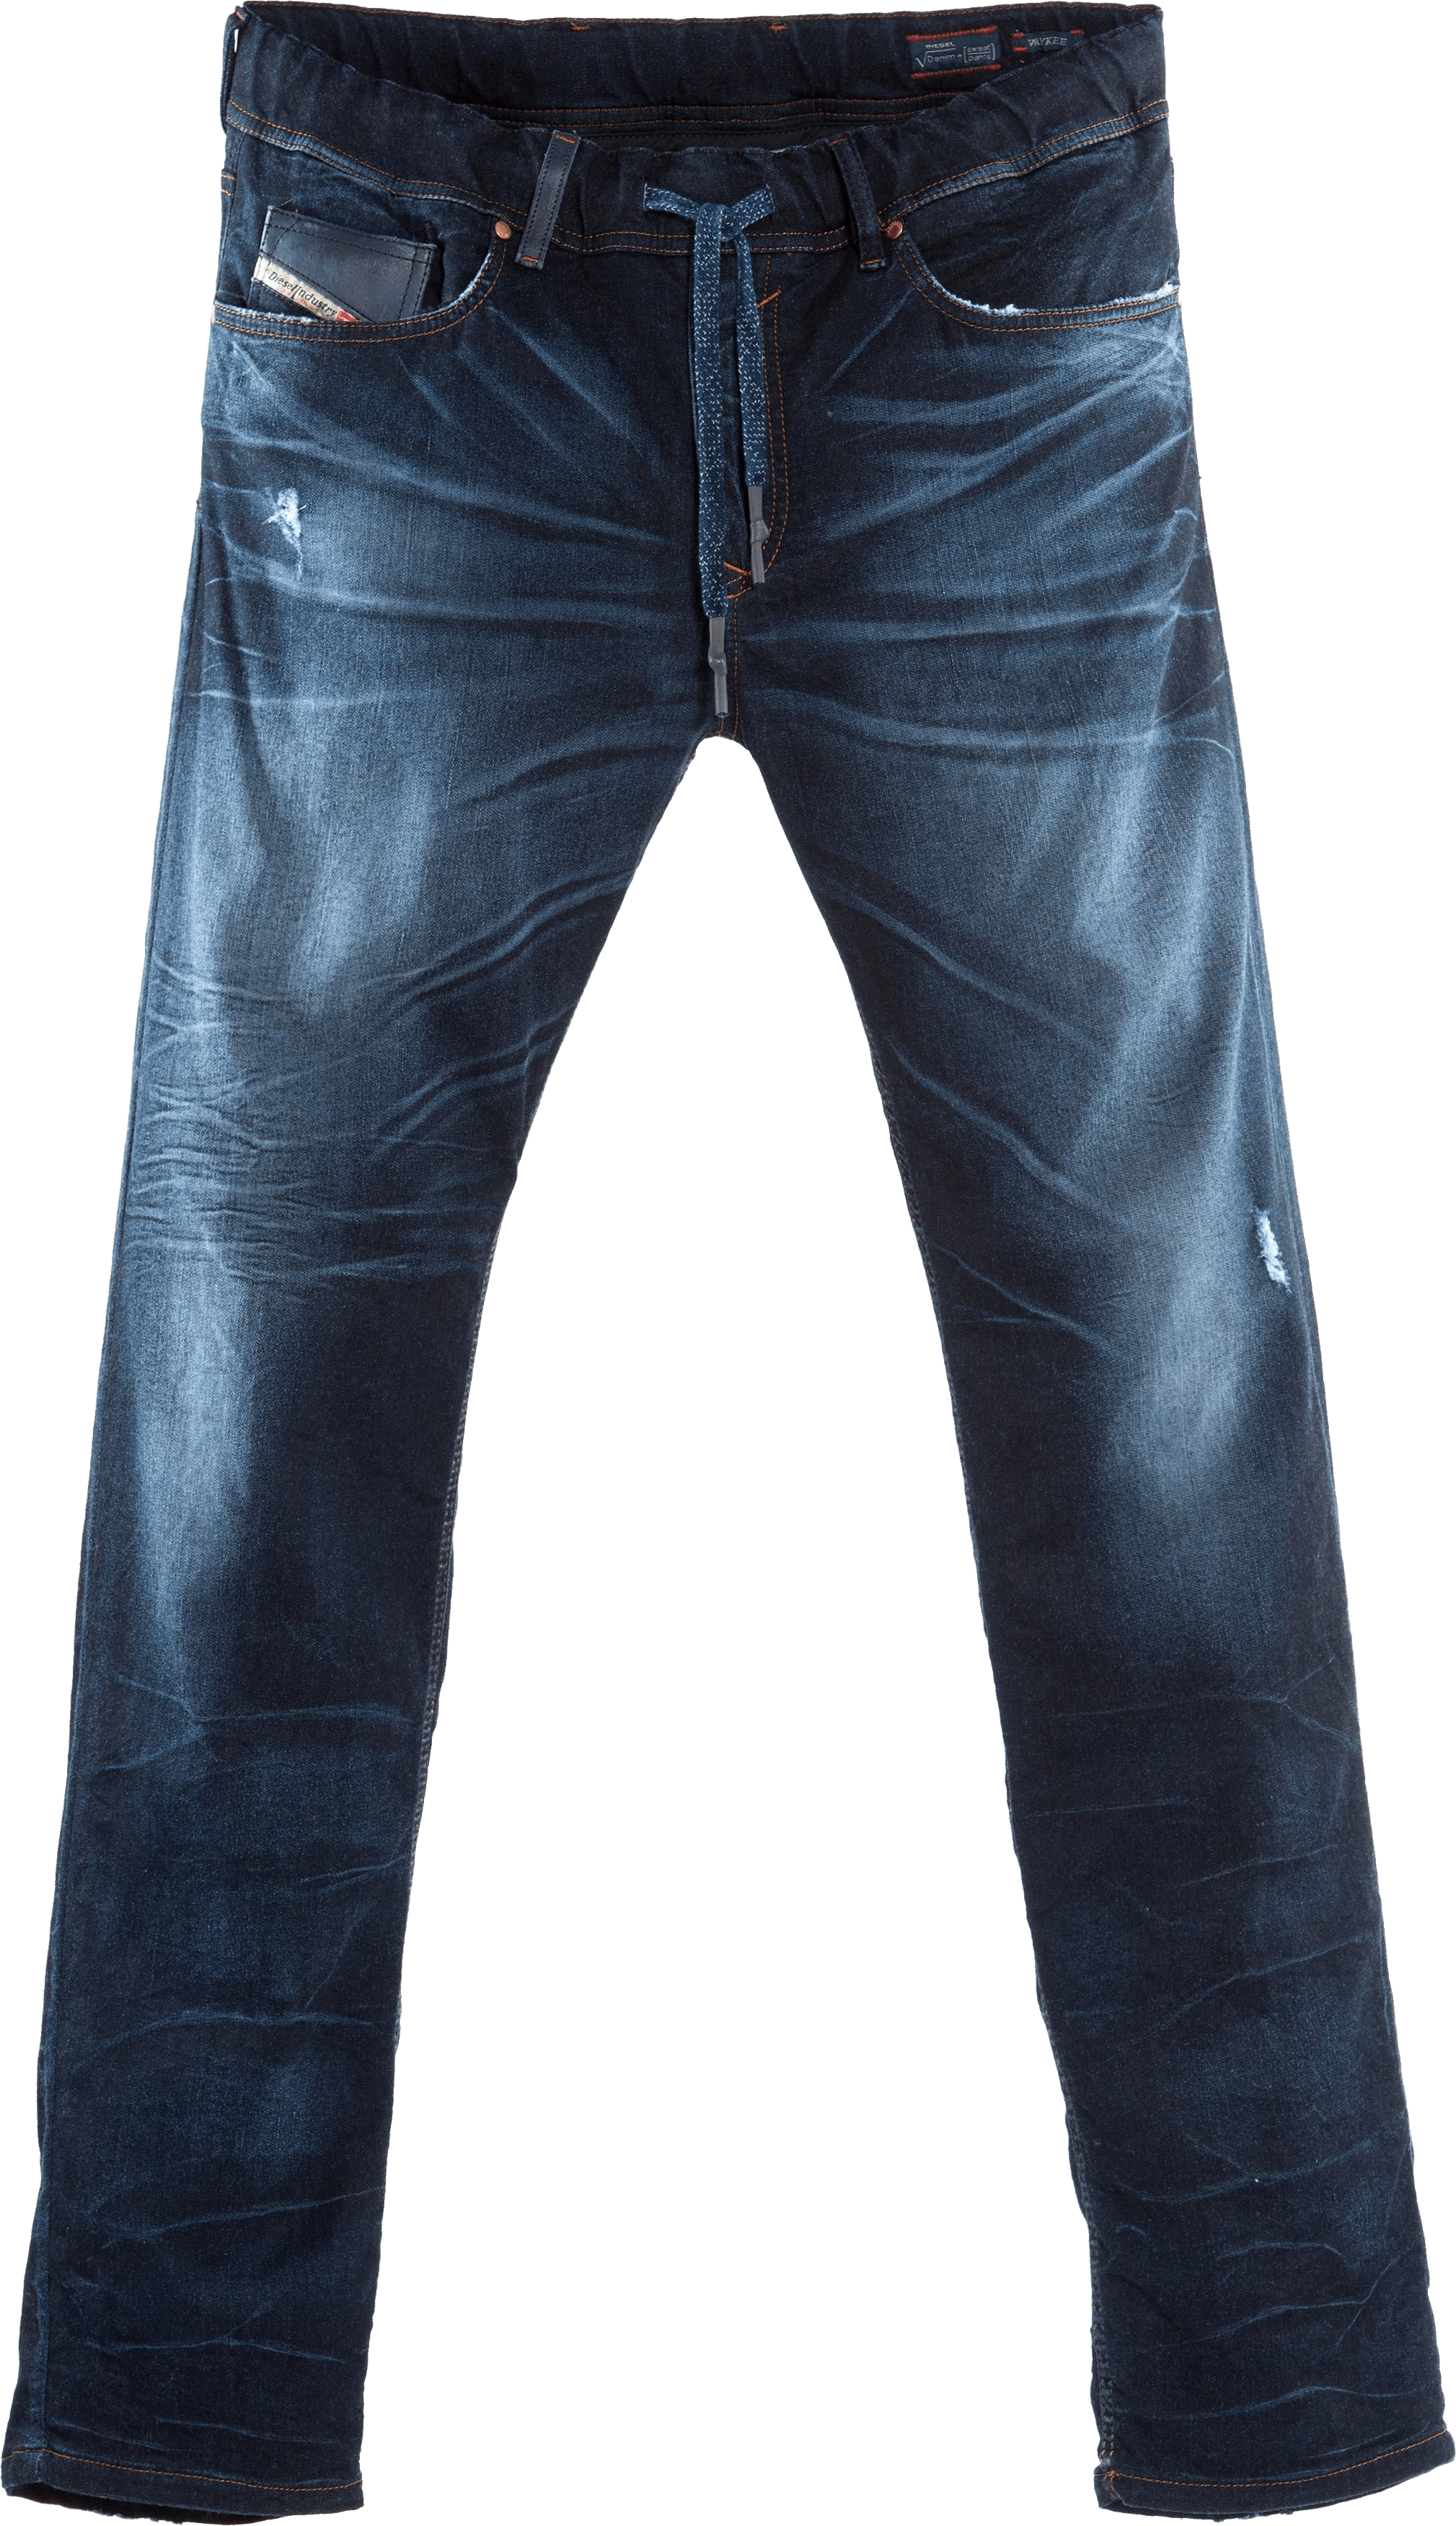 Jeans PNG Clipart, Blue Jean, Mens Jean, Denim Jeans HD Images - Free